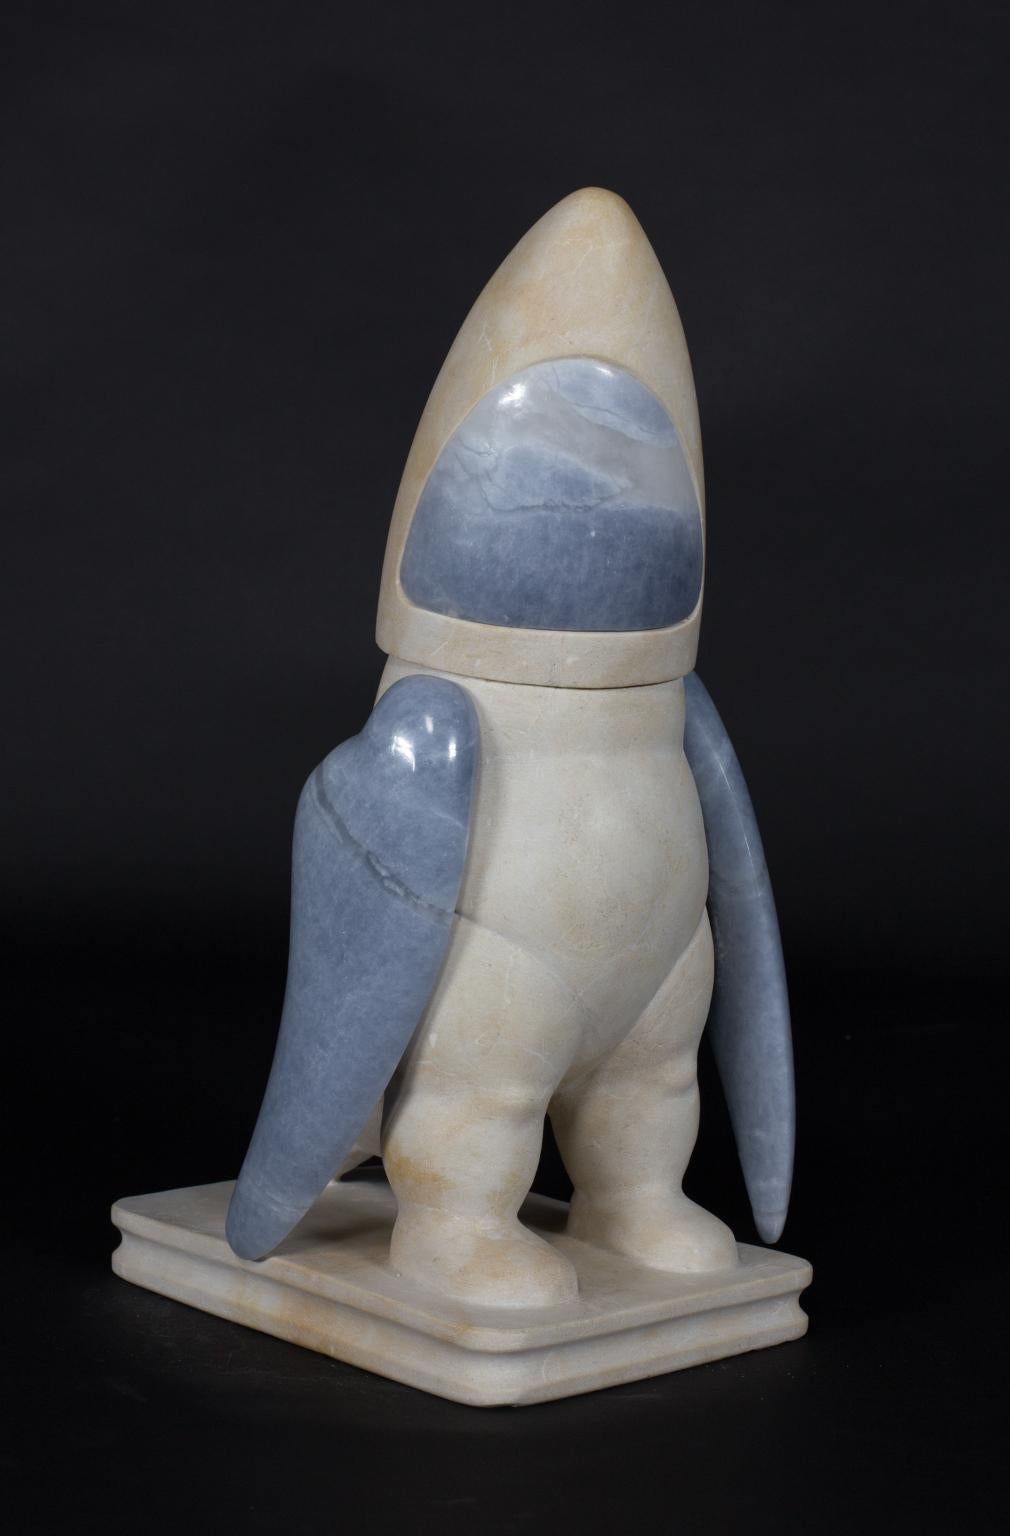 New Age Explorers: The Shark. Figurative Marble Sculpture by Mario Romero